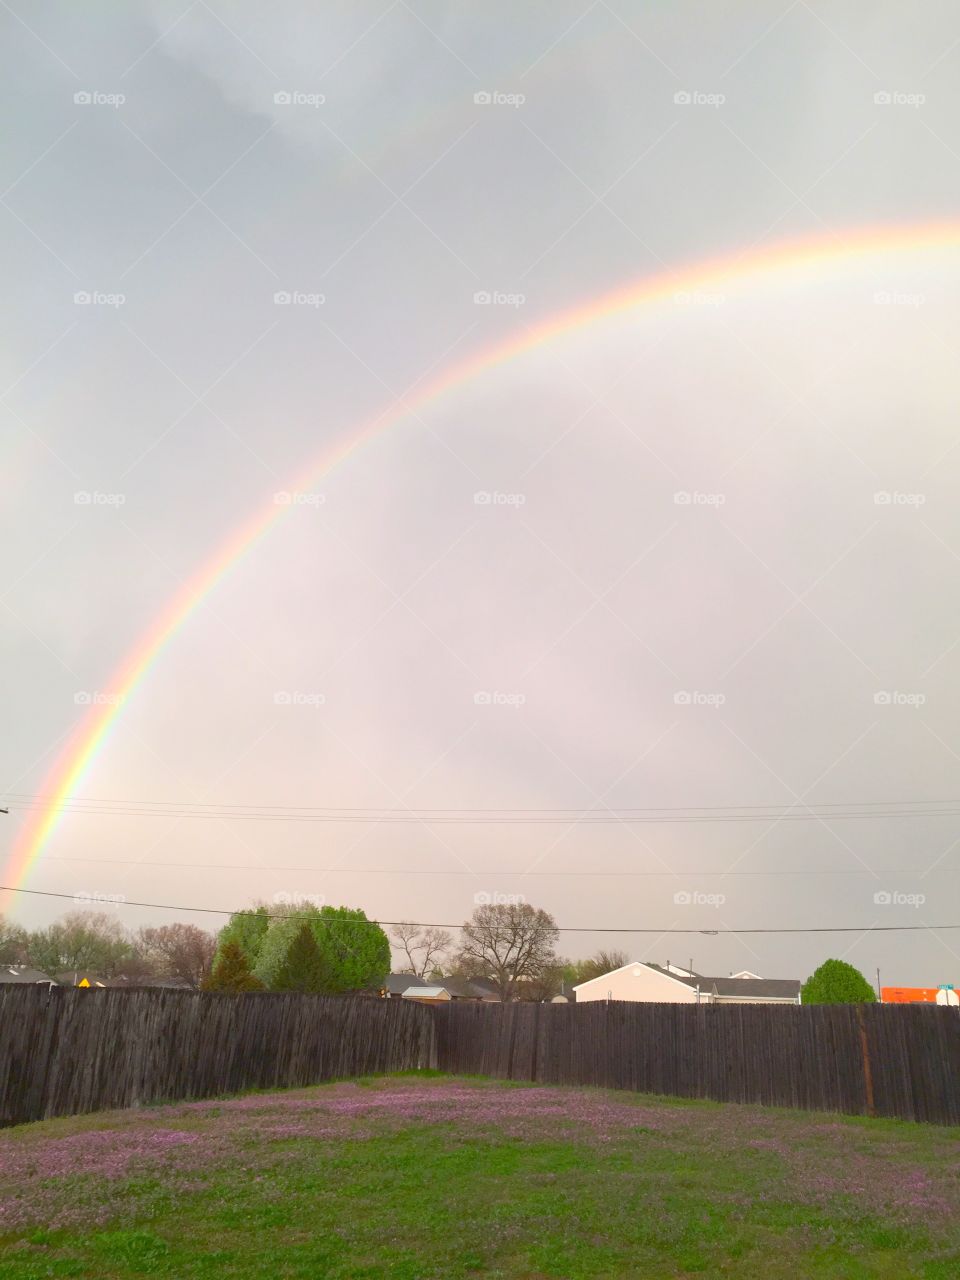 Rainbow in the Sky. Rainbow in my backyard sky after a rainy day